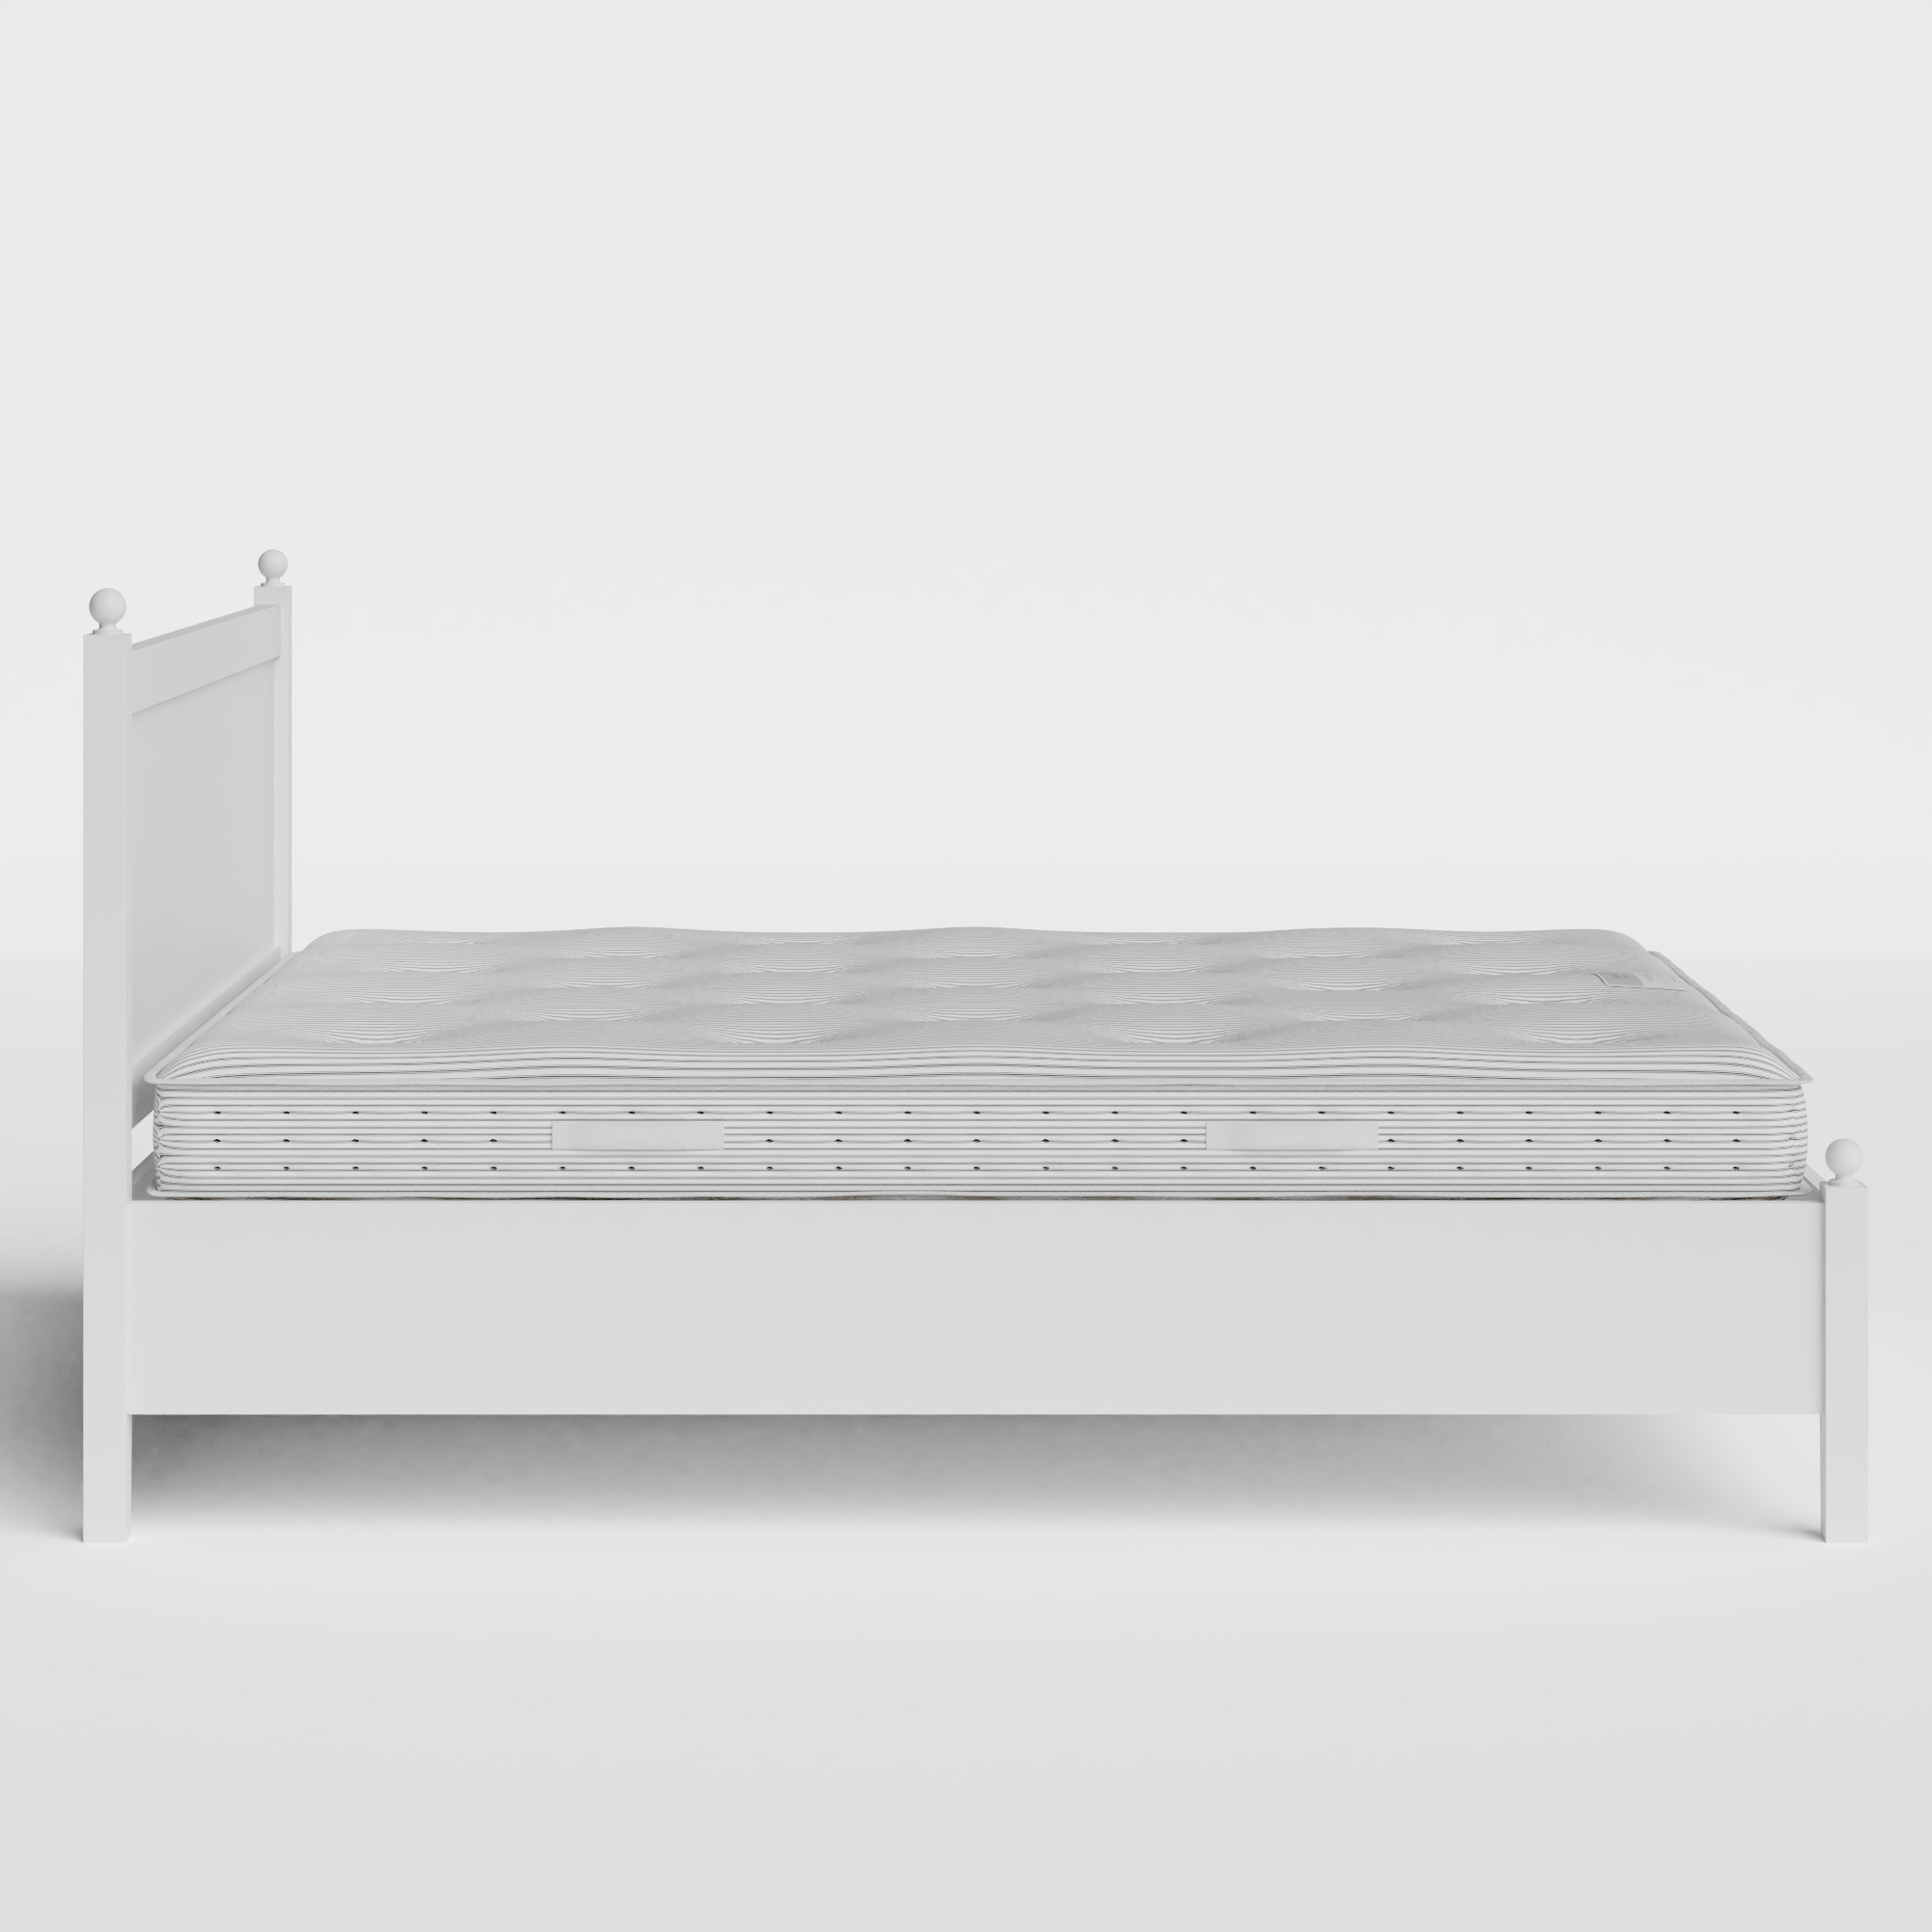 Marbella Low Footend Painted houten bed in wit met matras